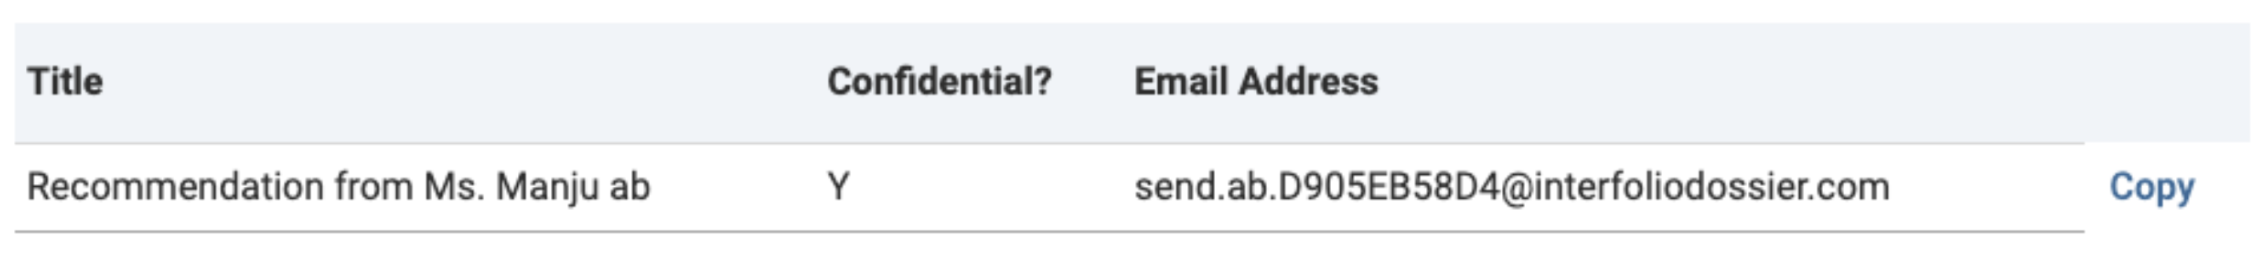 Copy adjacent to email address